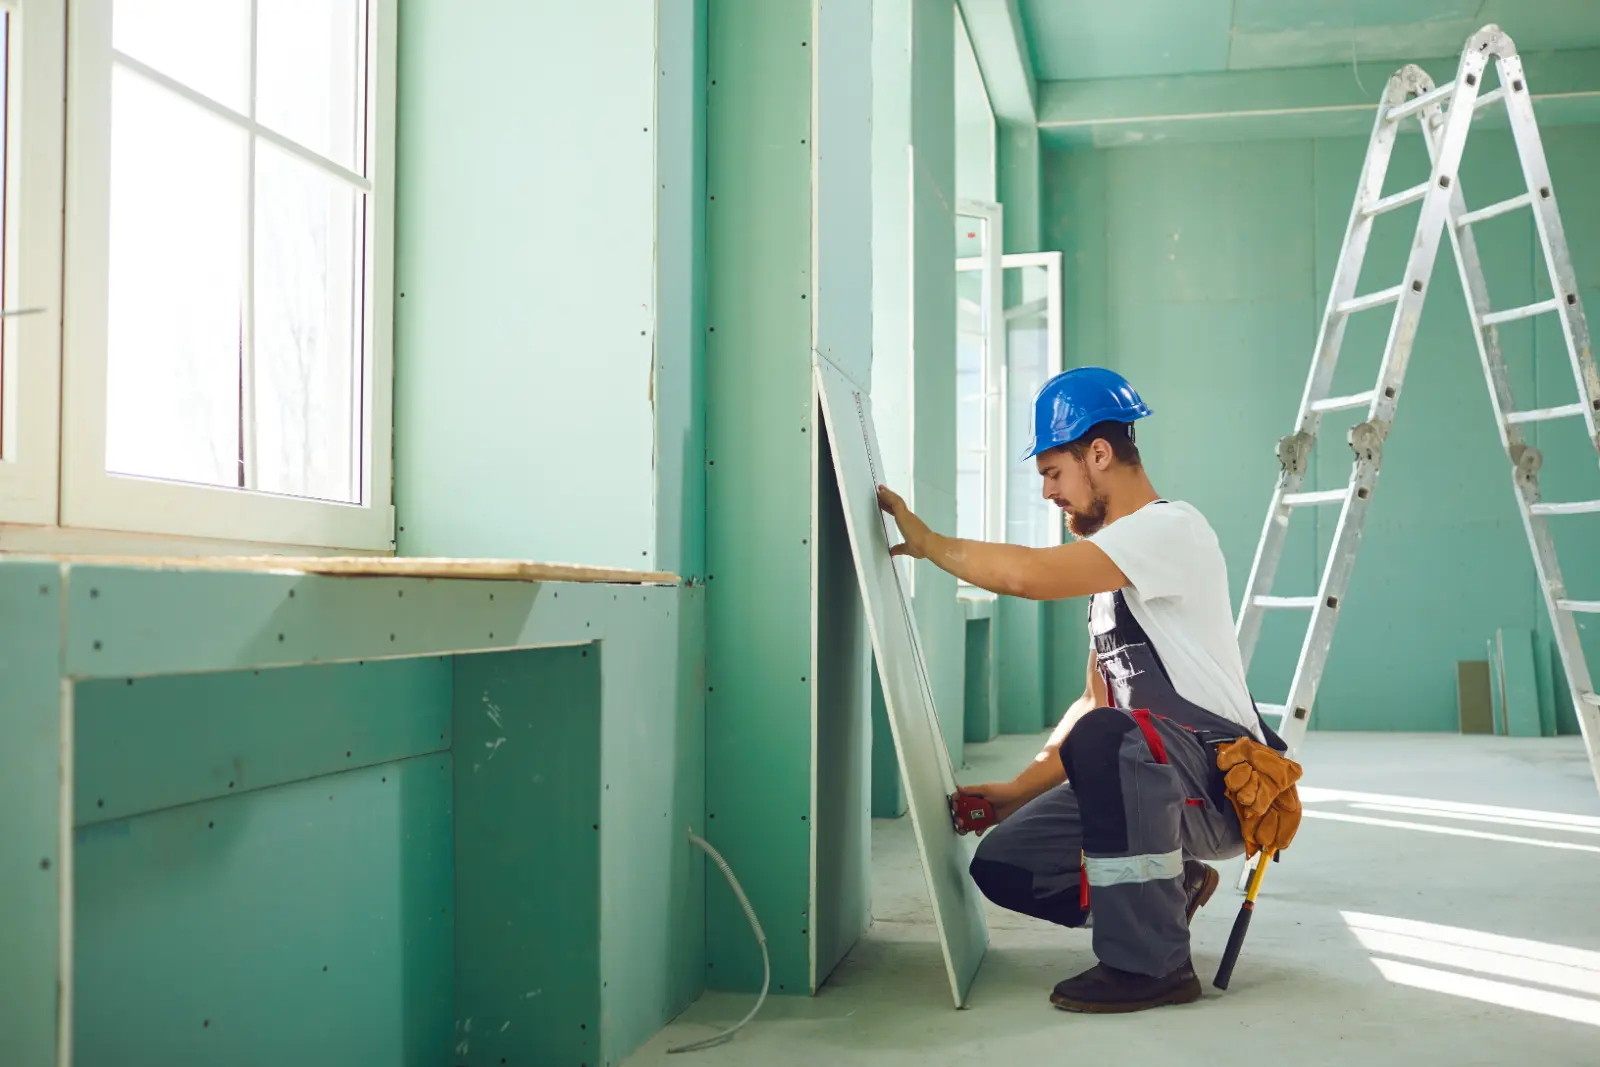 Proper Mudding Vital. Worker builder installs plasterboard drywall at a construction